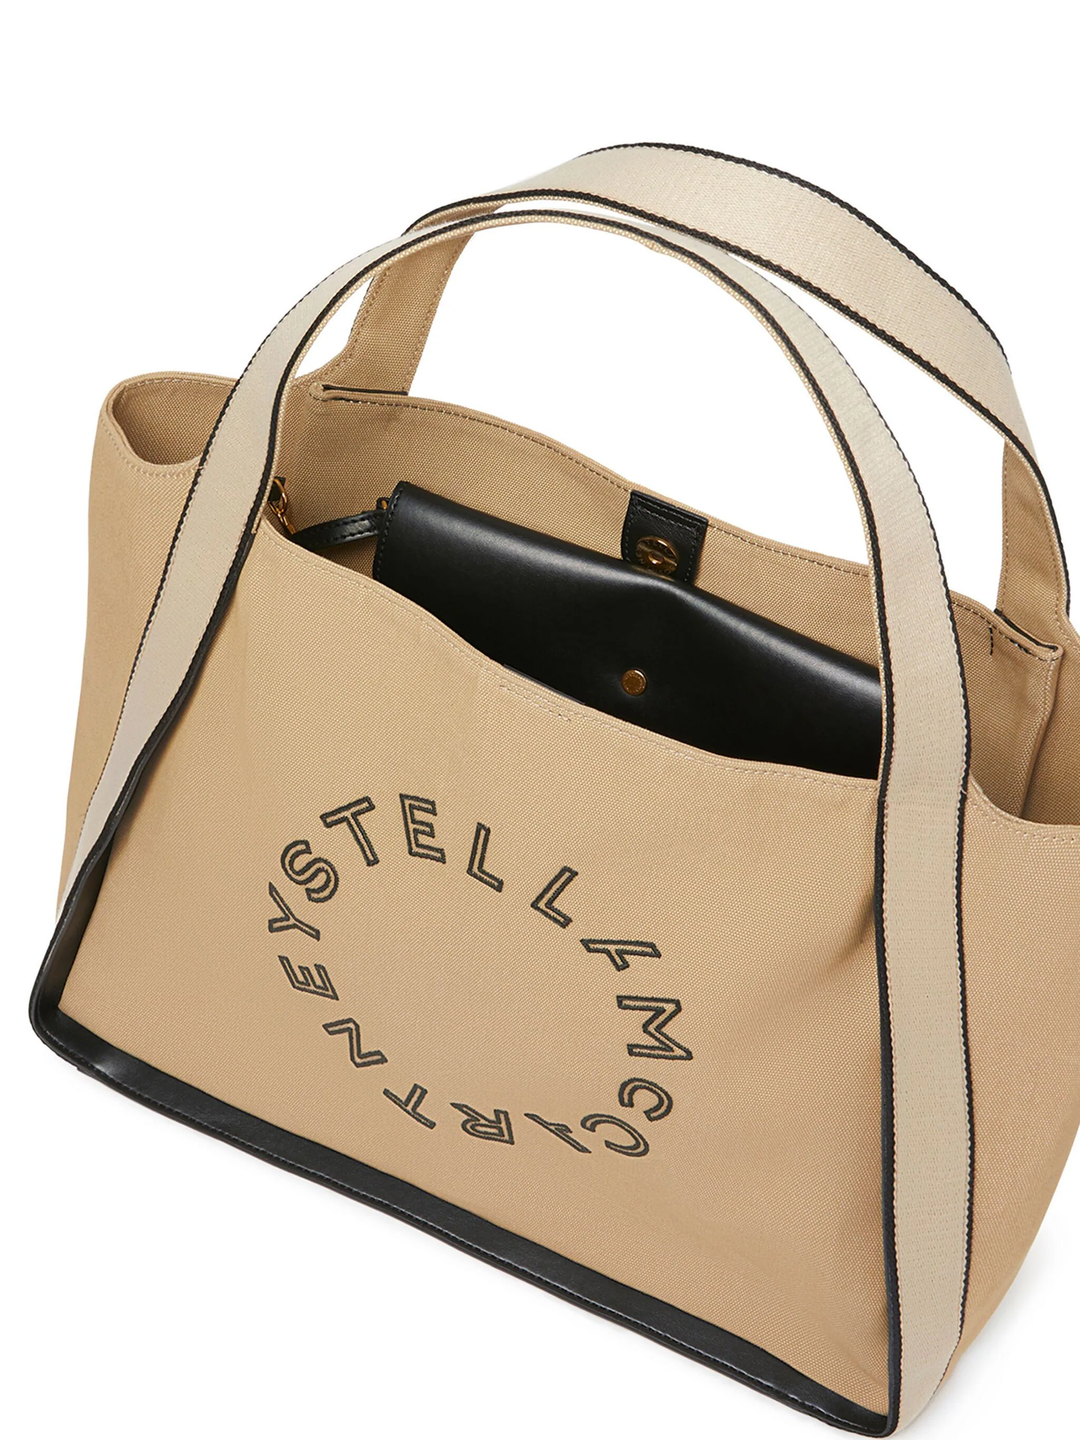 Stella-McCartney-Embroidered-Logo-Tote-Beige-5